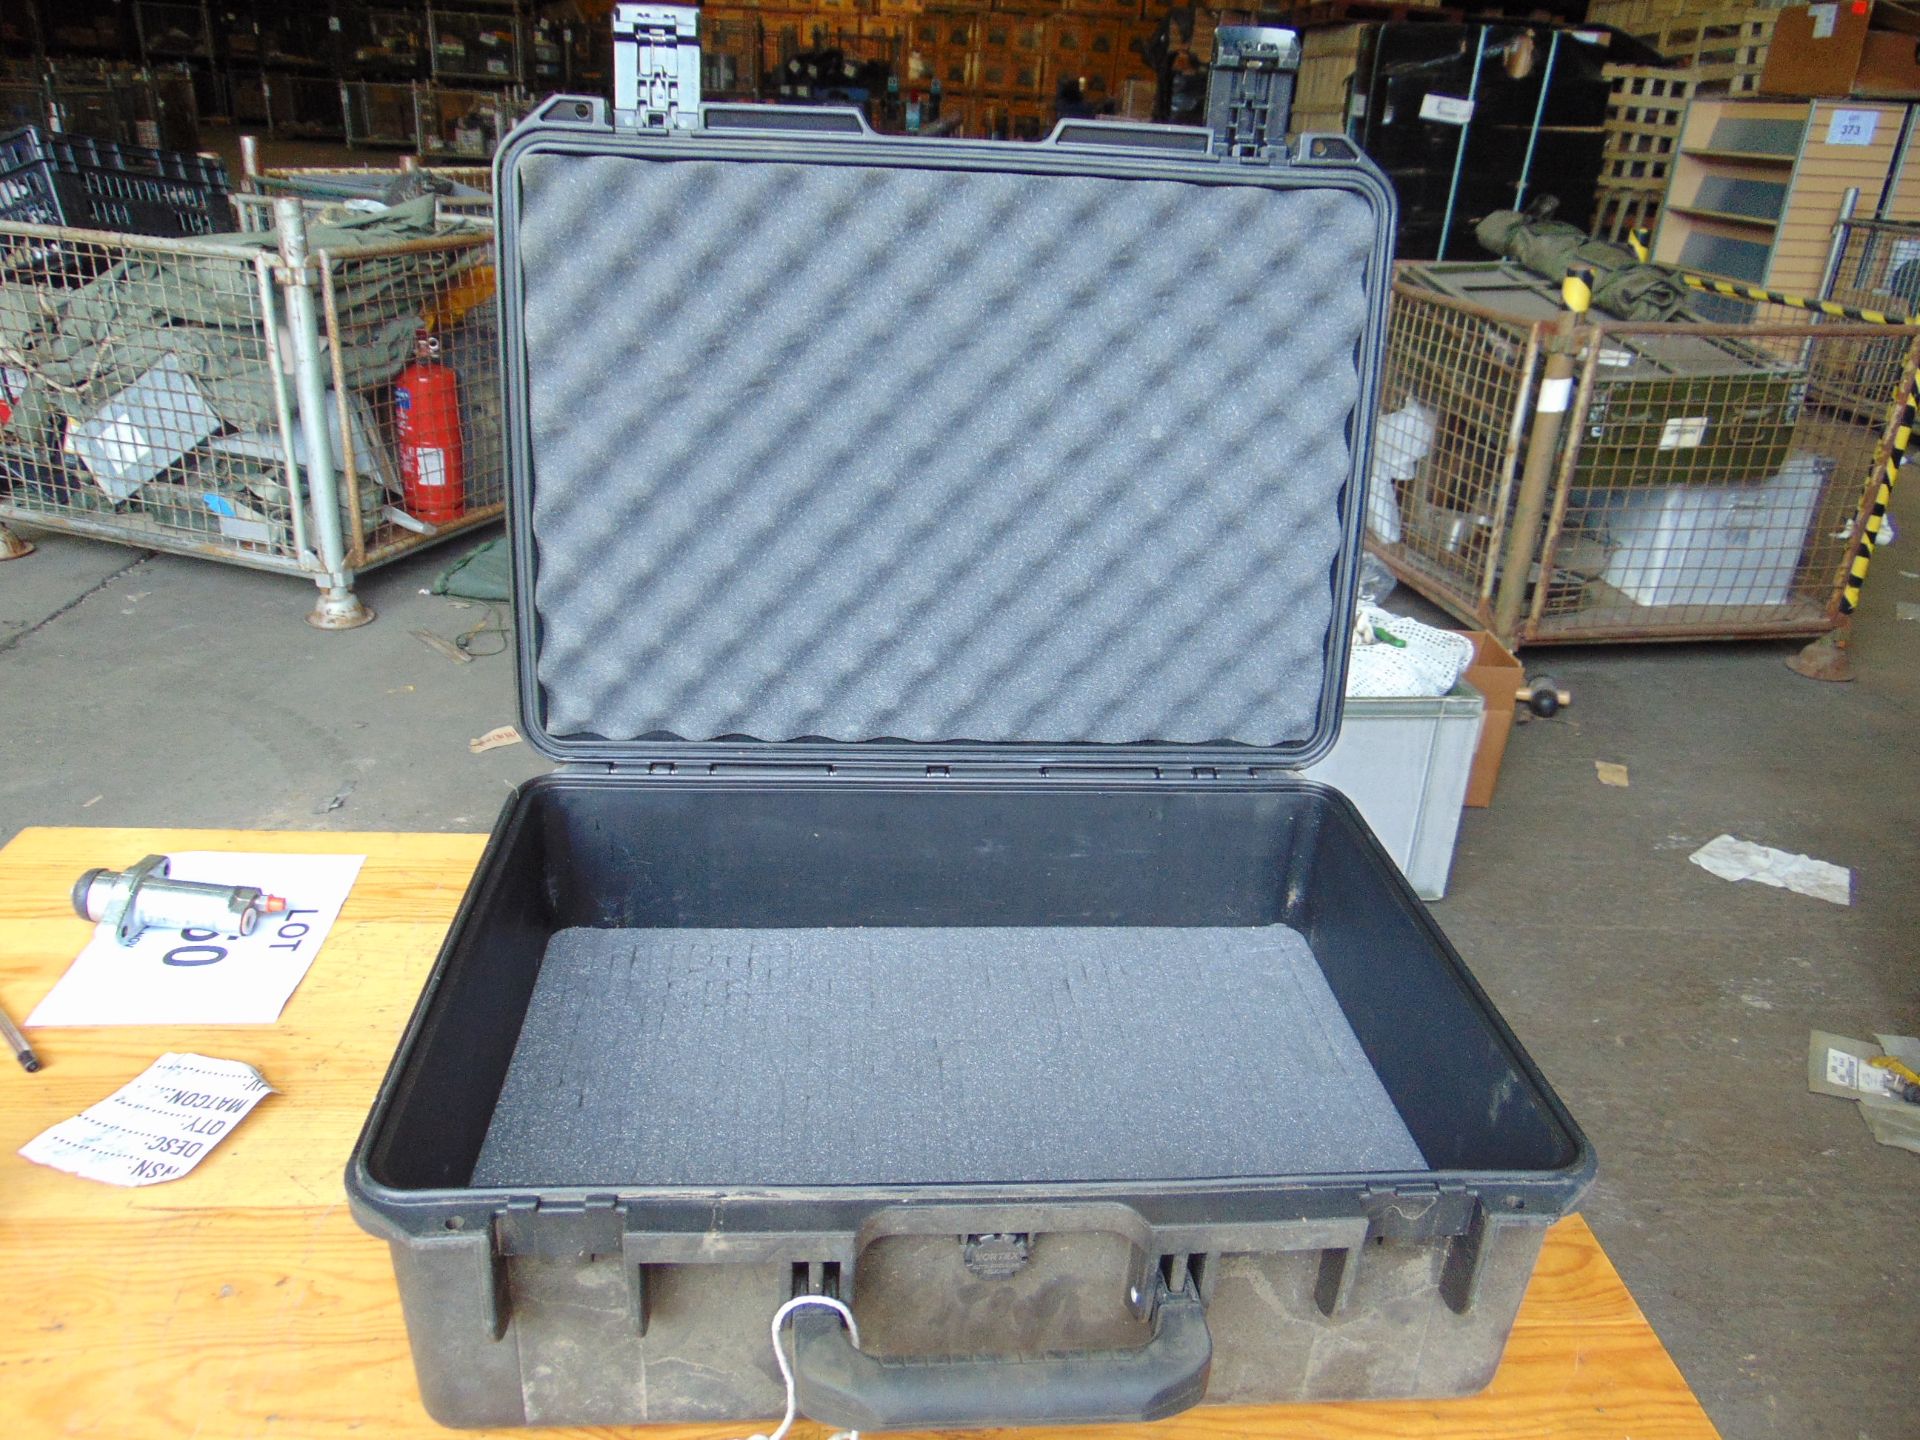 Water Proof Hi-Impact Storm Case iM2600 Peli Case. Size 55 x 40 x 25 cms